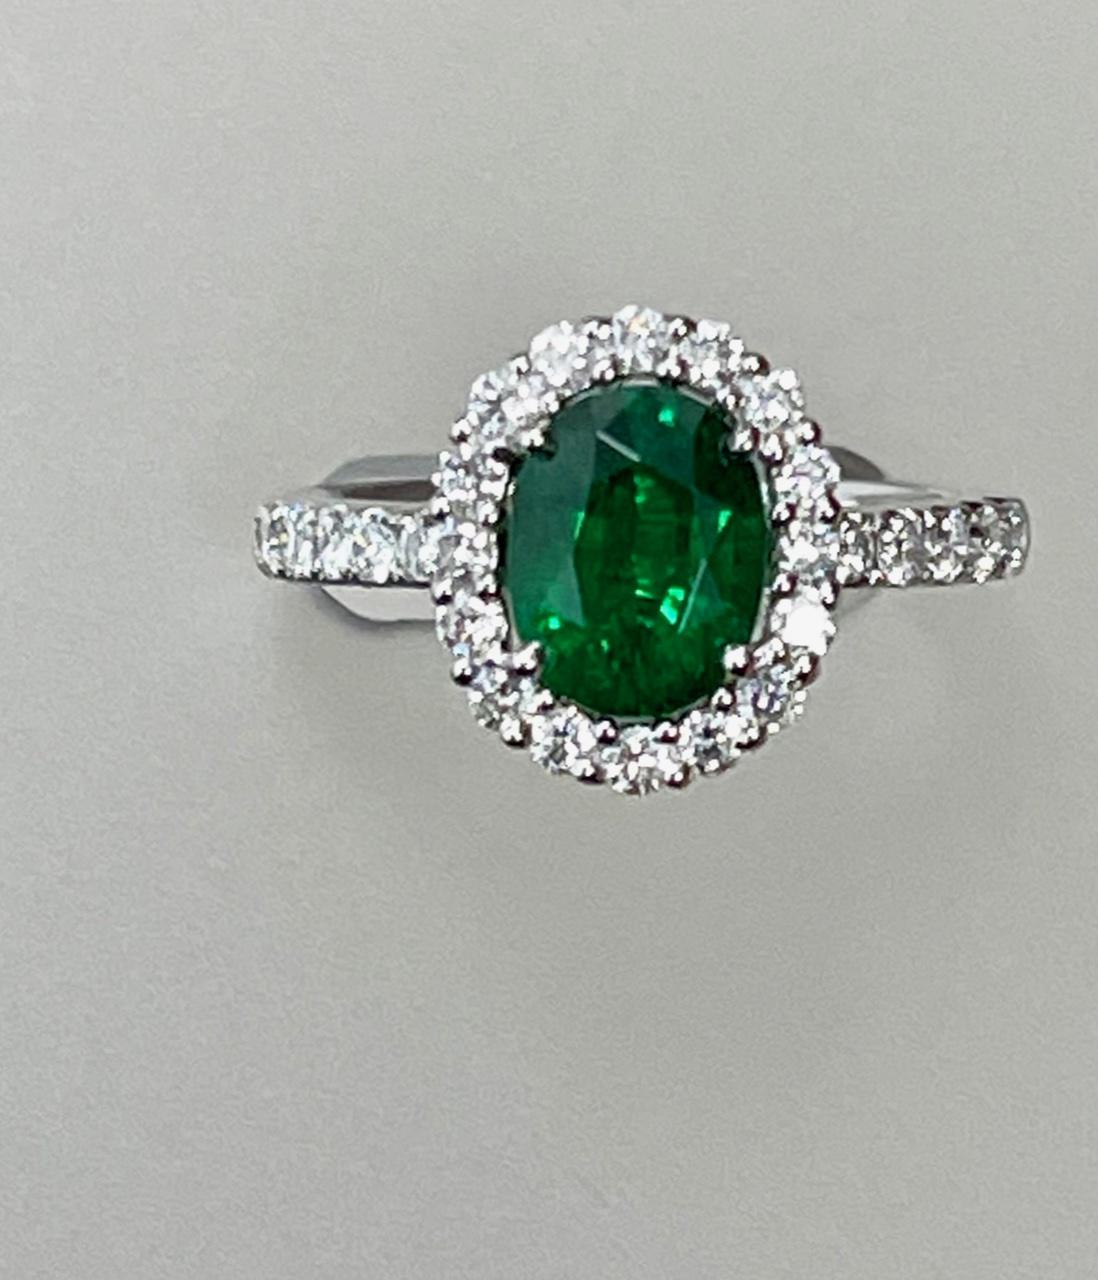 1.48 Carat Oval shape zambian emerald set in 18k white gold ring 